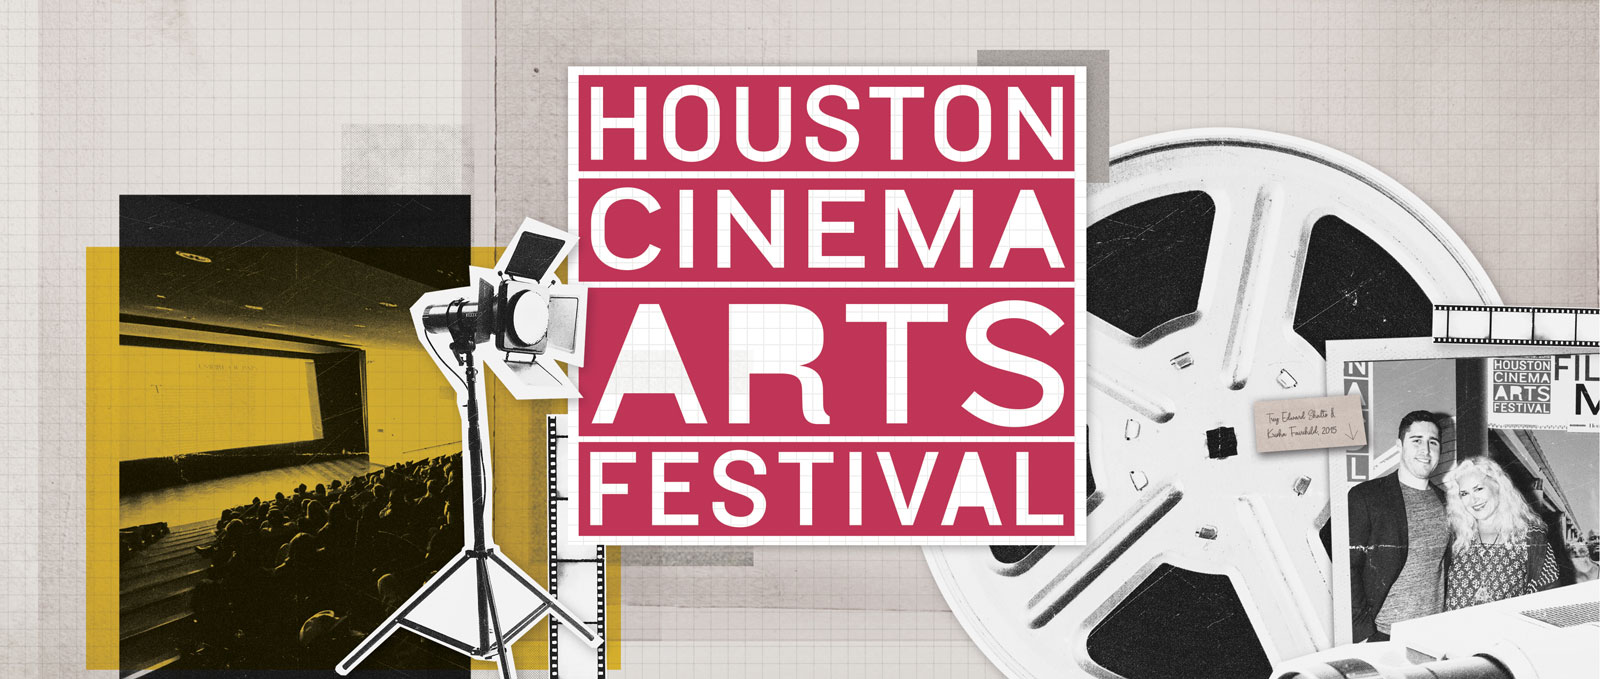 The 15th annual Houston Cinema Arts Festival